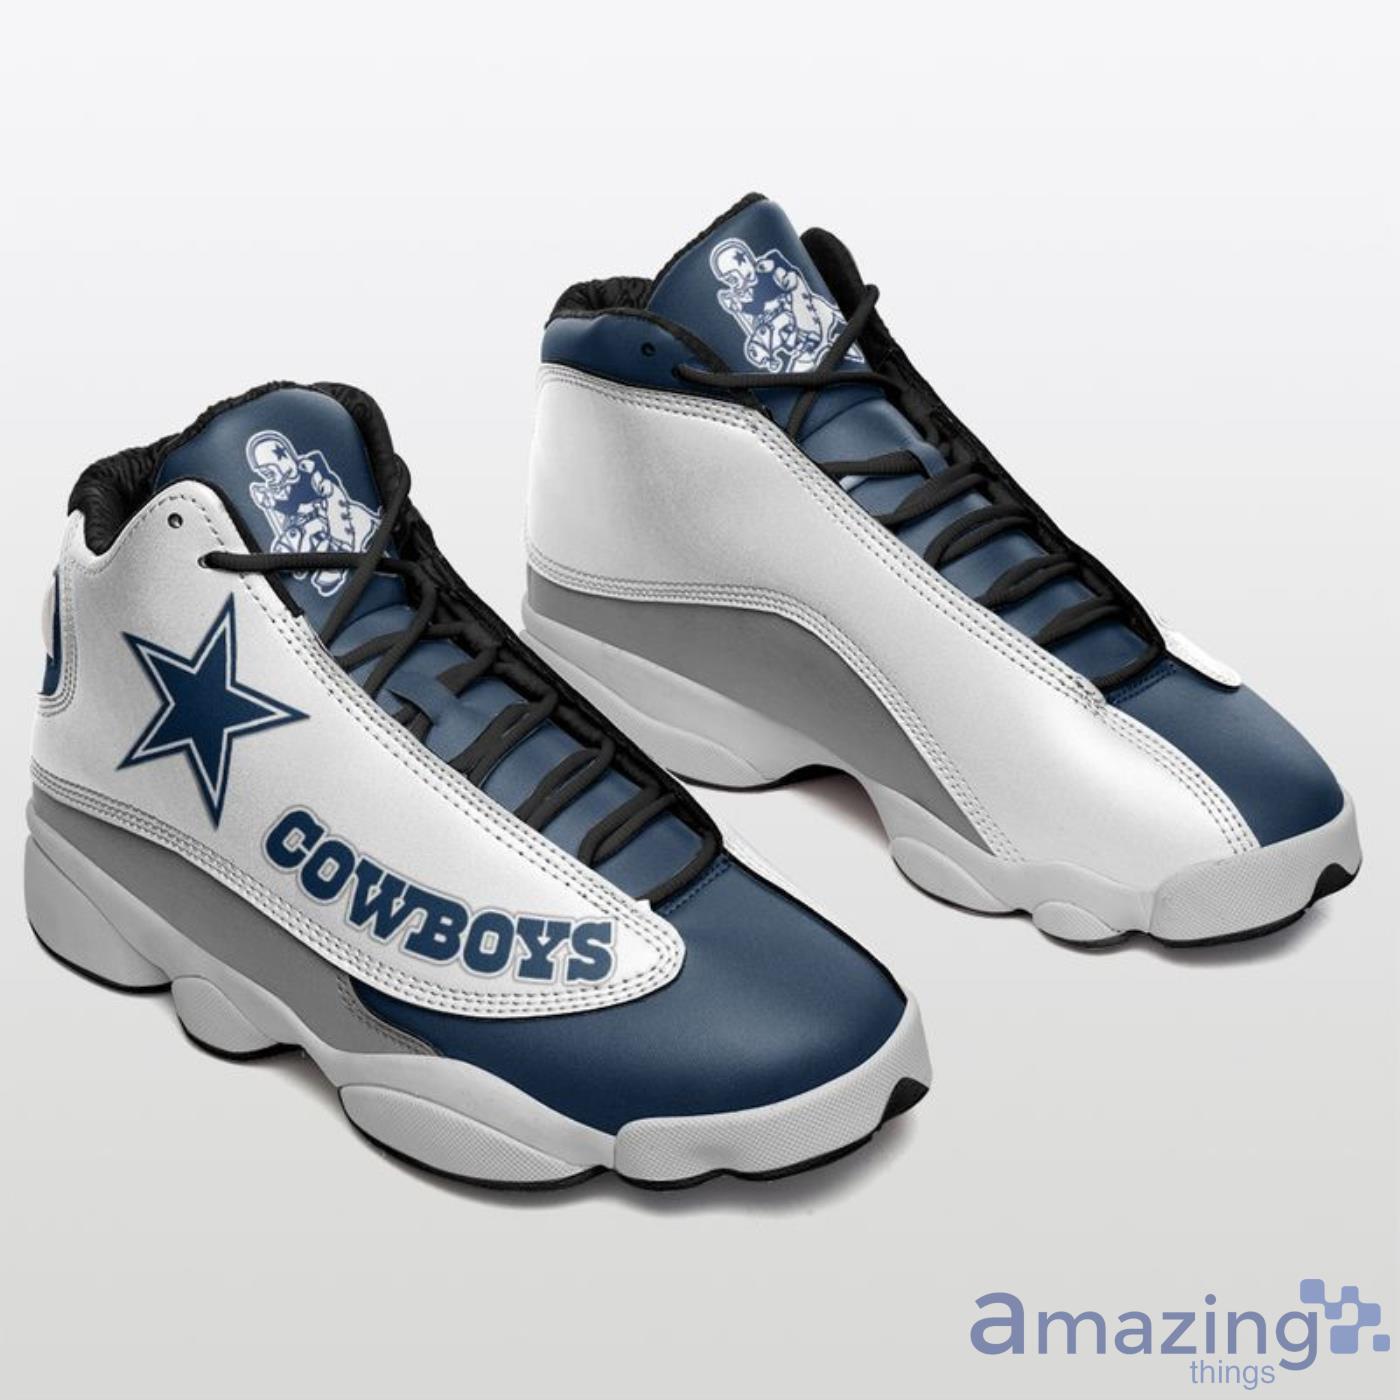 Nfl Dallas Cowboys Limited Edition Air 